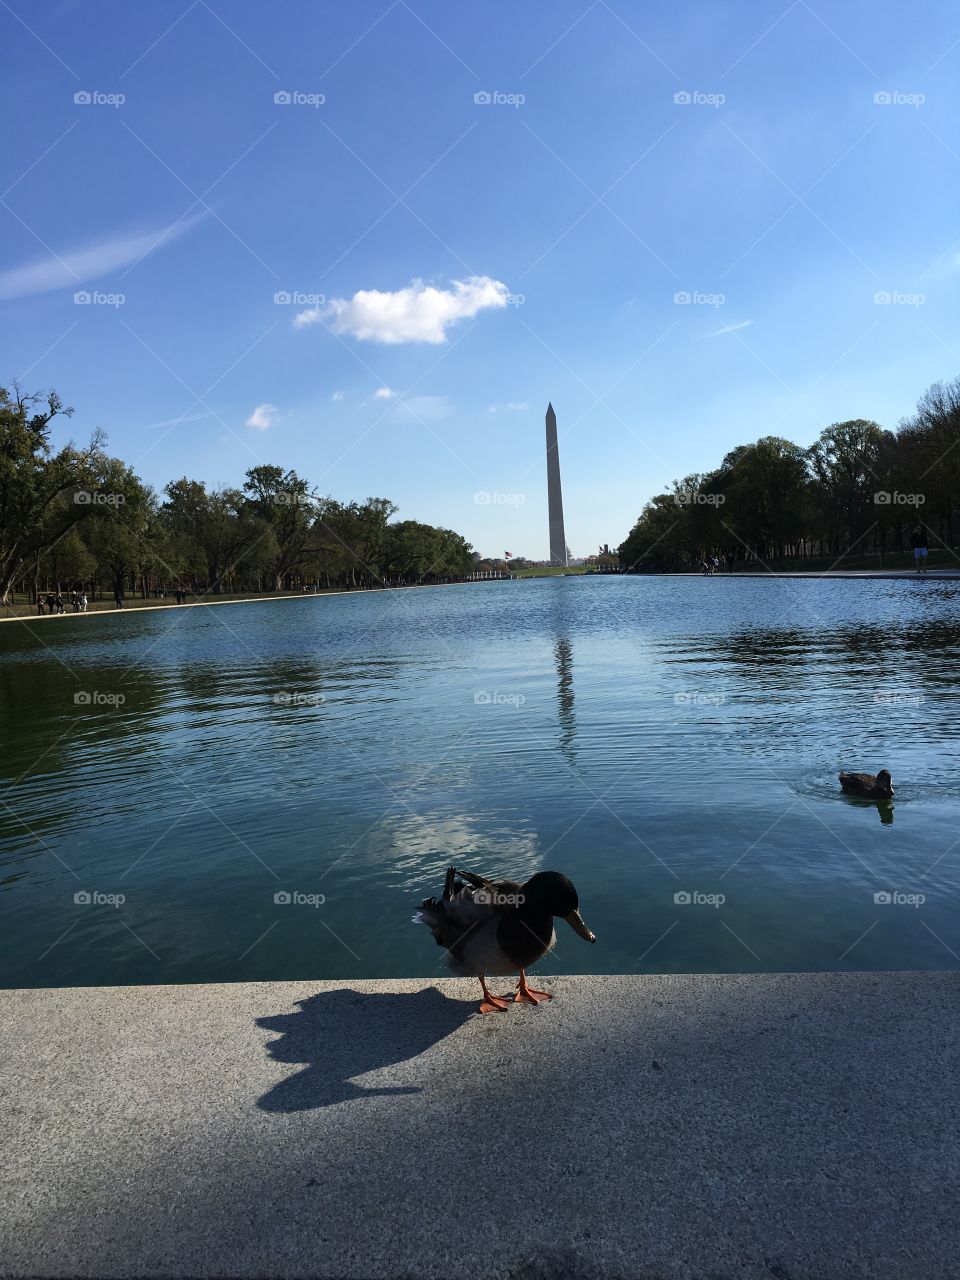 Ducks enjoying the sun in Washington, D. C.